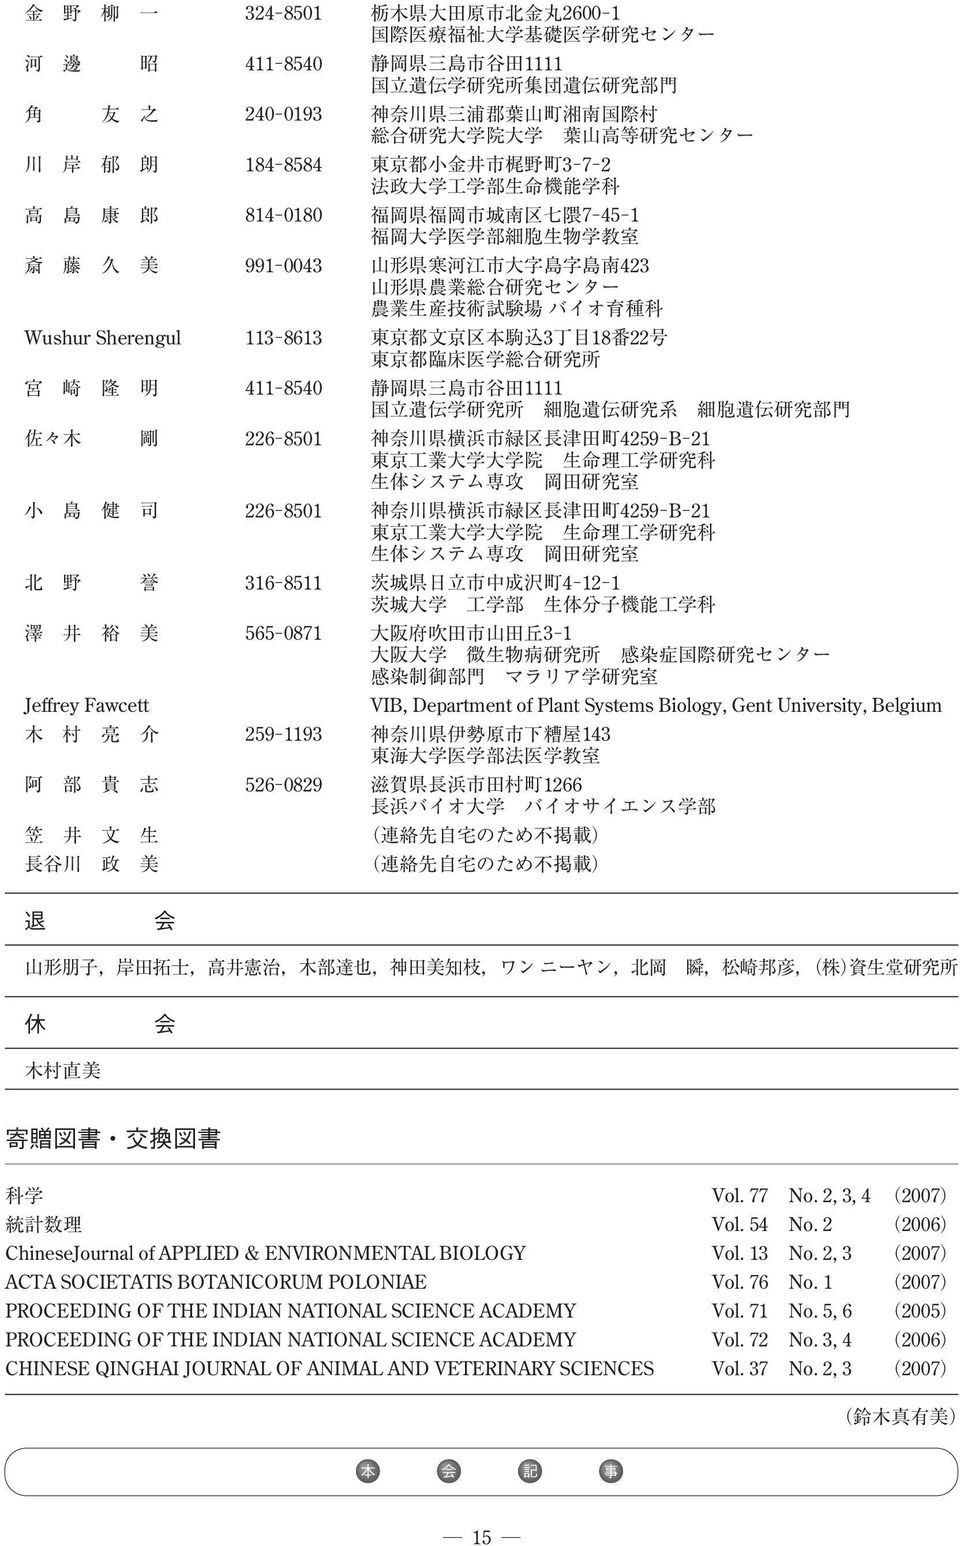 2 2006 ChineseJournal of APPLIED & ENVIRONMENTAL BIOLOGY Vol. 13 No. 2, 3 2007 ACTA SOCIETATIS BOTANICORUM POLONIAE Vol. 76 No.